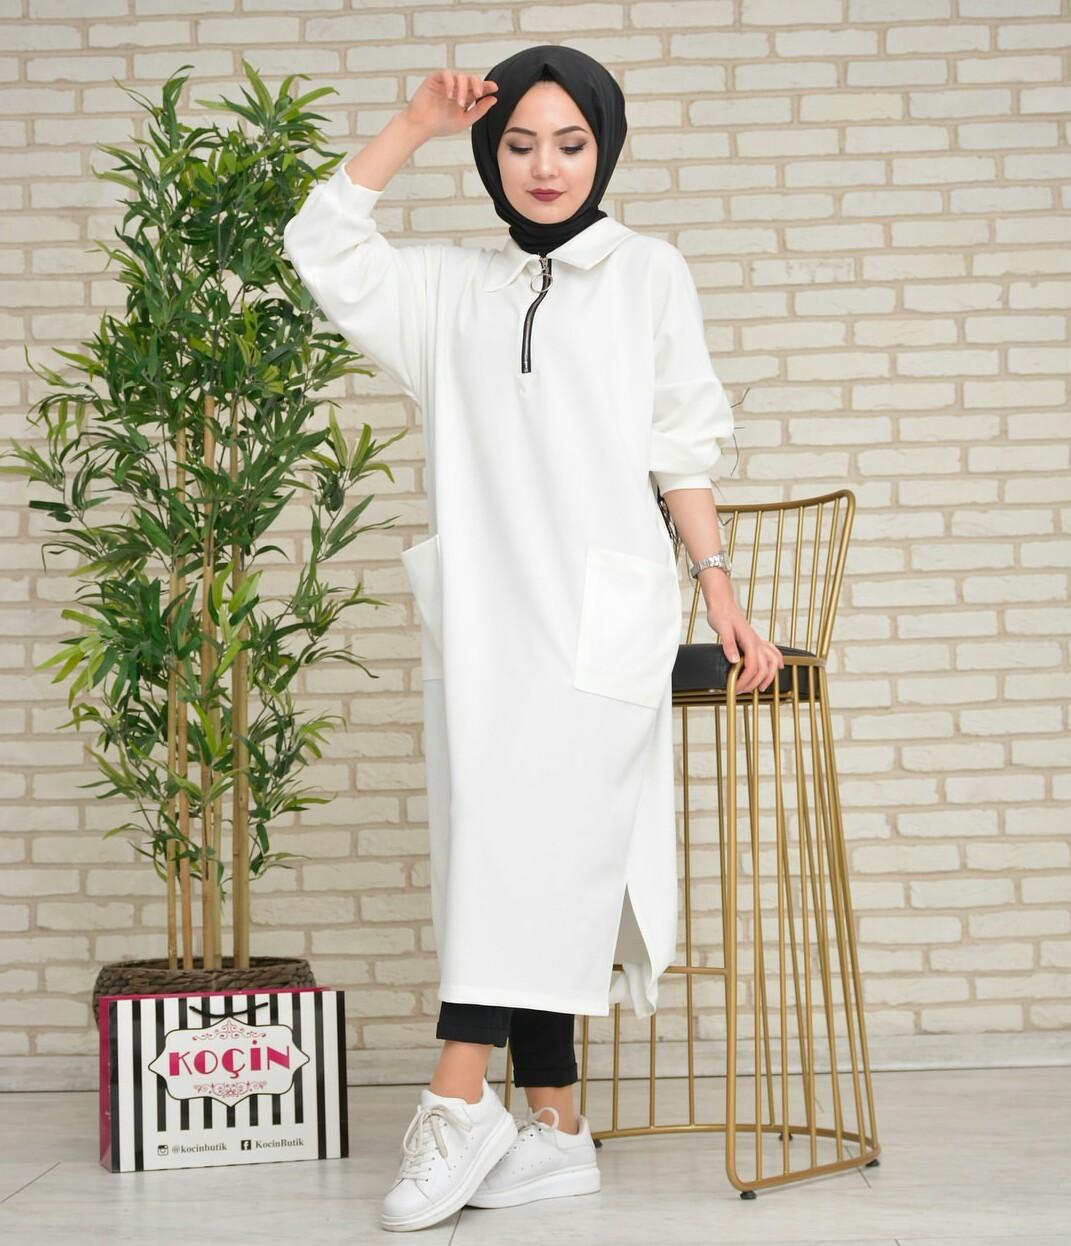 Baju Muslim Modern GANESHA TUNIK Bahan Mosscrape Baju Tunik Baju Atasan Modern Terbaru Fashion Wanita Baju Kerja Best Seller Pakaian Perempuan Casual Hijab Trendy Muslimah Simple Top Termurah Baju Kekinian Modis Baju Modern Dan Terbaru 2019